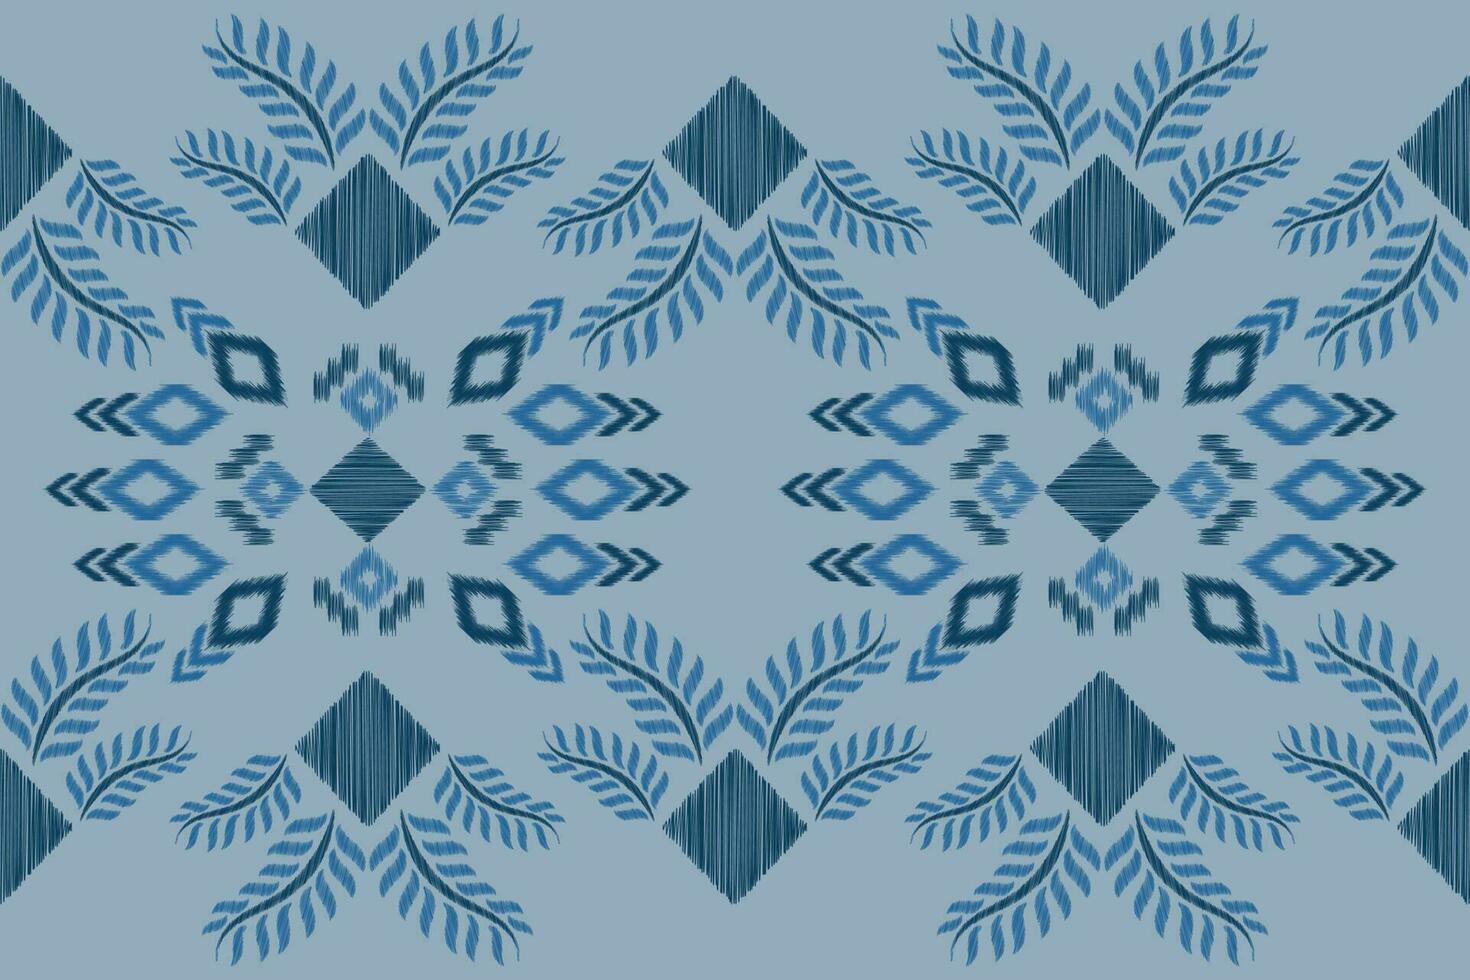 étnico ikat tecido padronizar geométrico estilo.africano ikat bordado étnico oriental padronizar marinha azul fundo. resumo,vetor,illustration.for textura,vestuário,scraf,decoração,tapete,seda. vetor